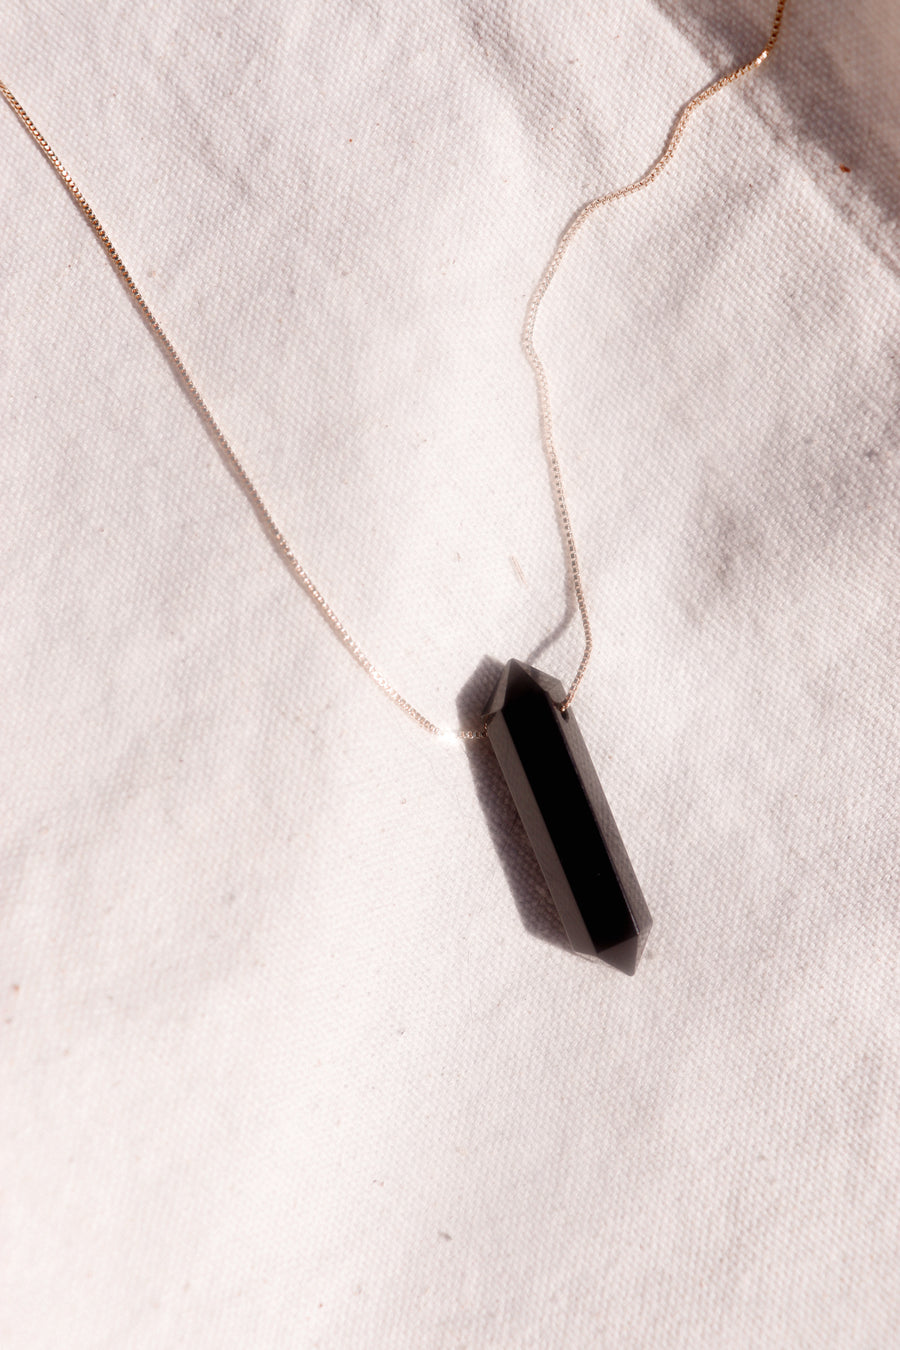 Goddess amulet | Obsidian point necklace